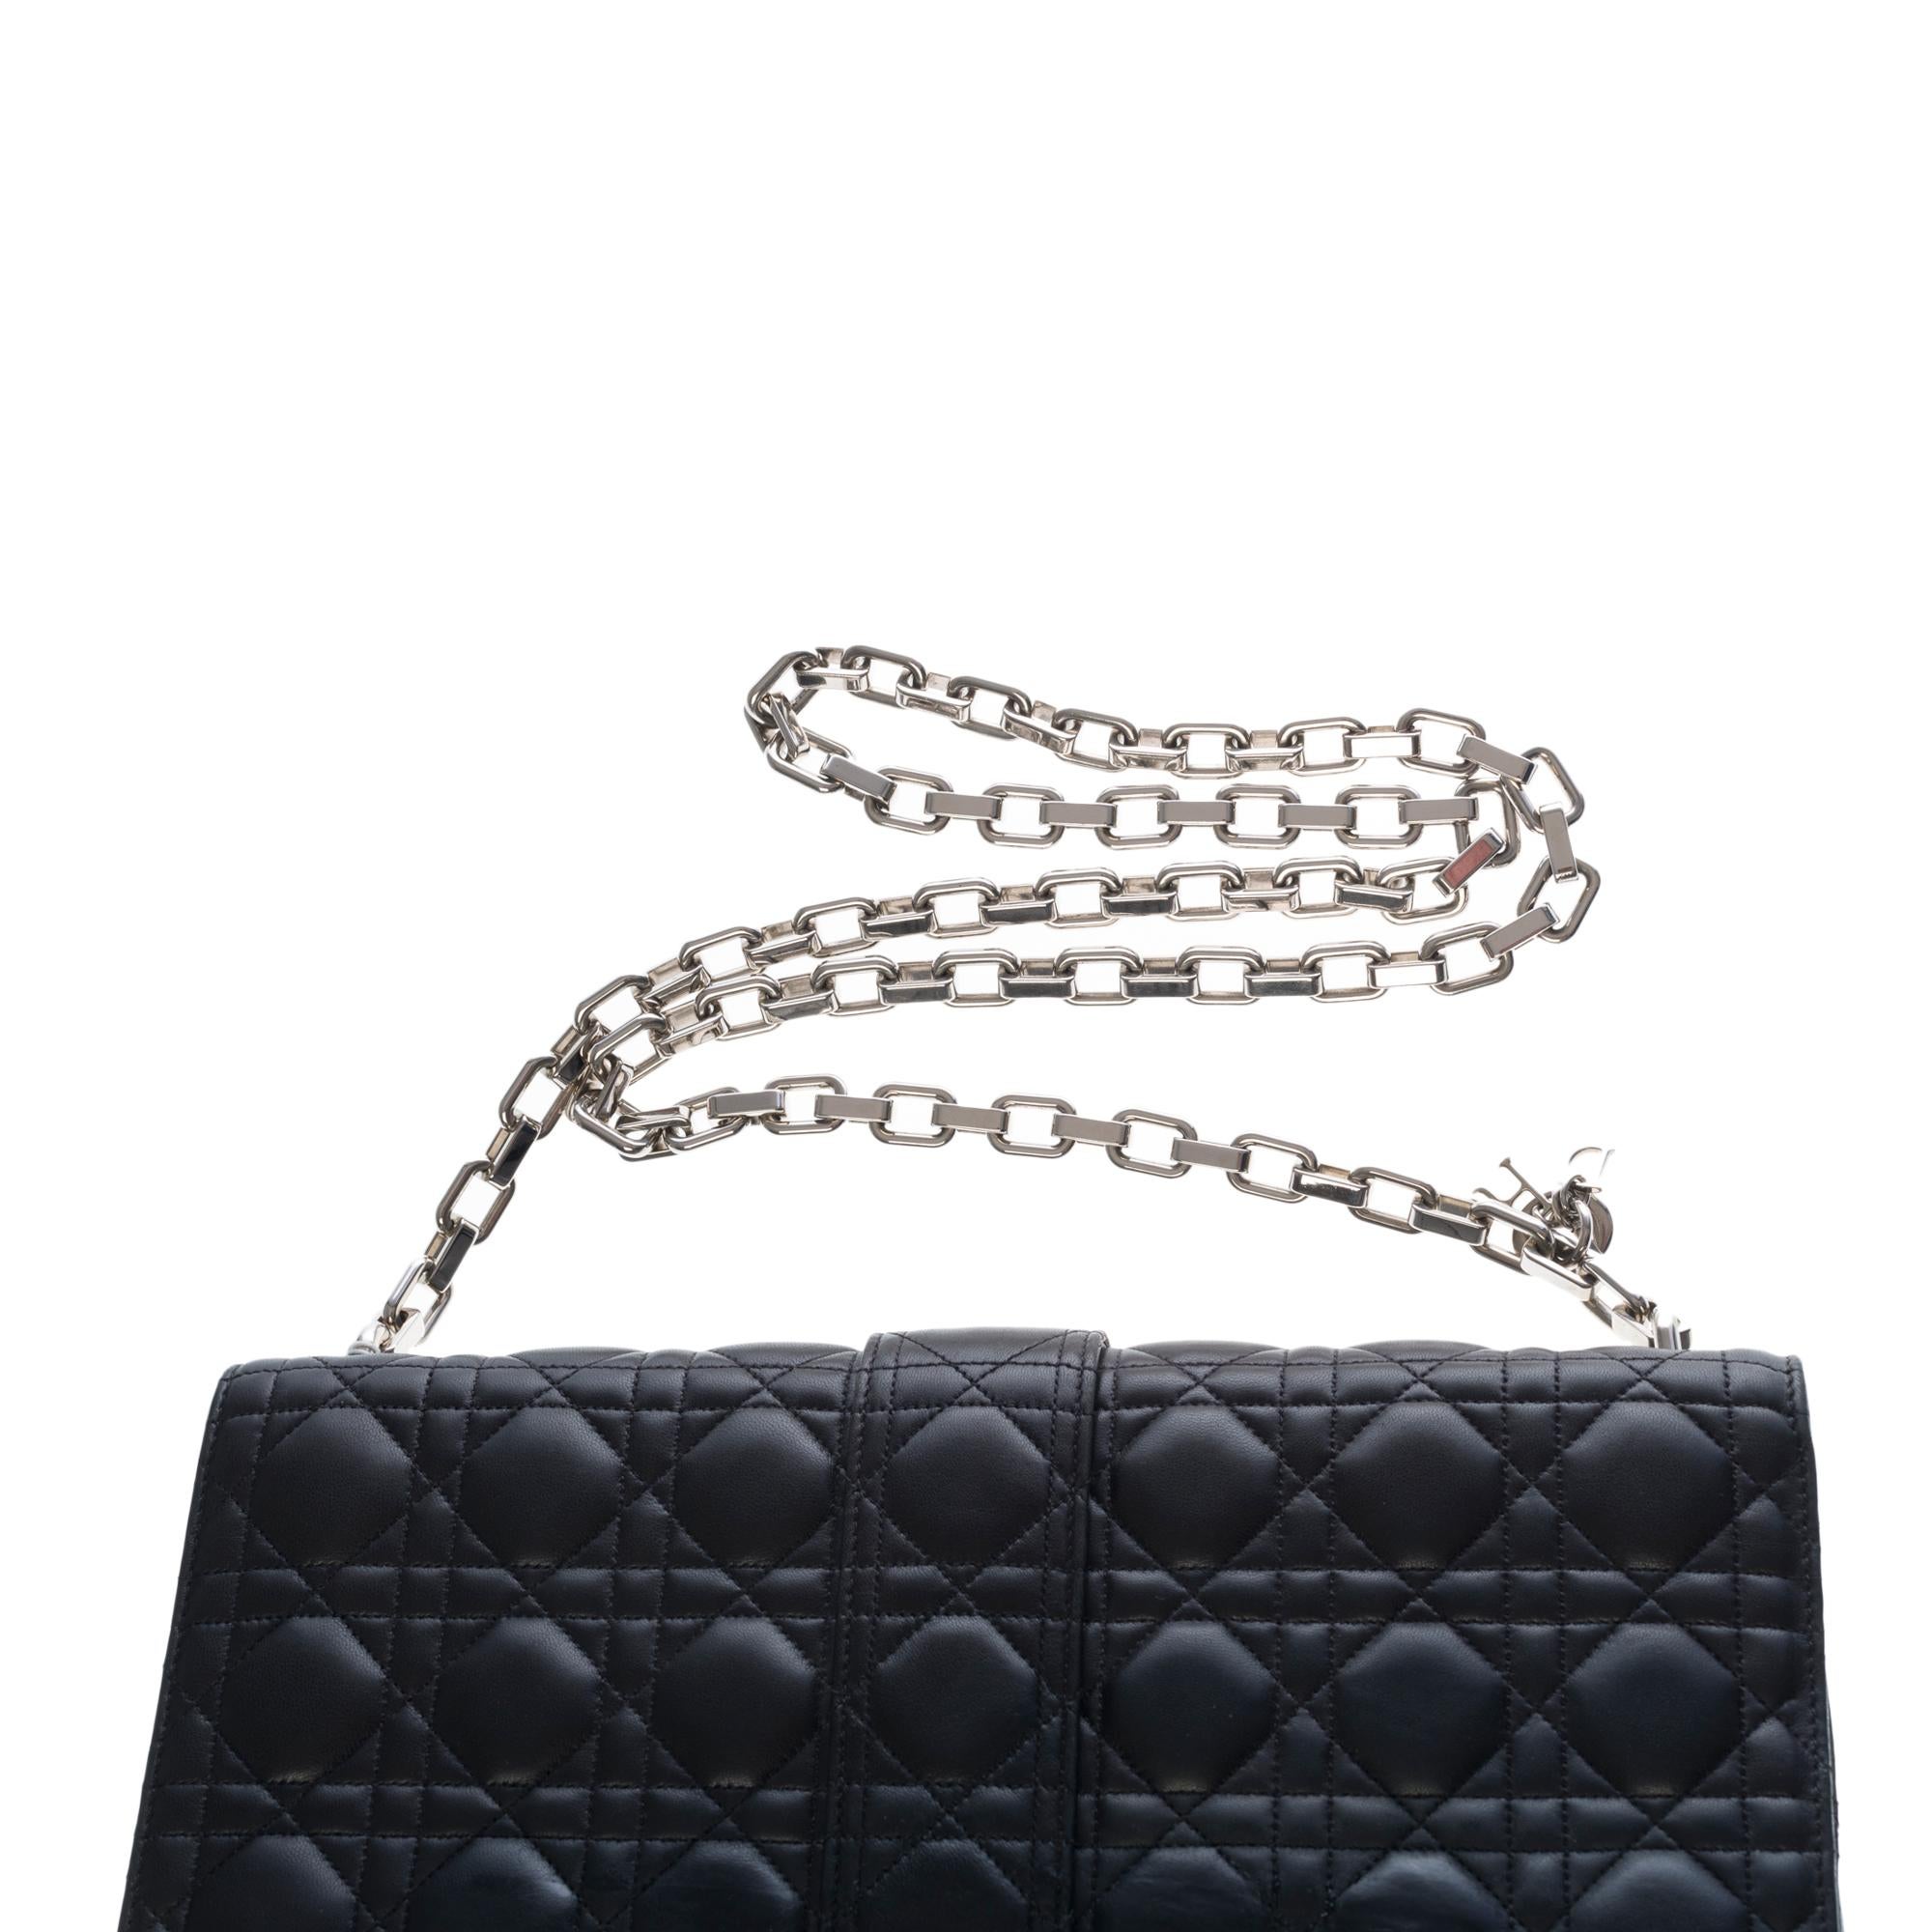 Women's Christian Dior Miss Dior GM Shoulder bag in black cannage leather, SHW